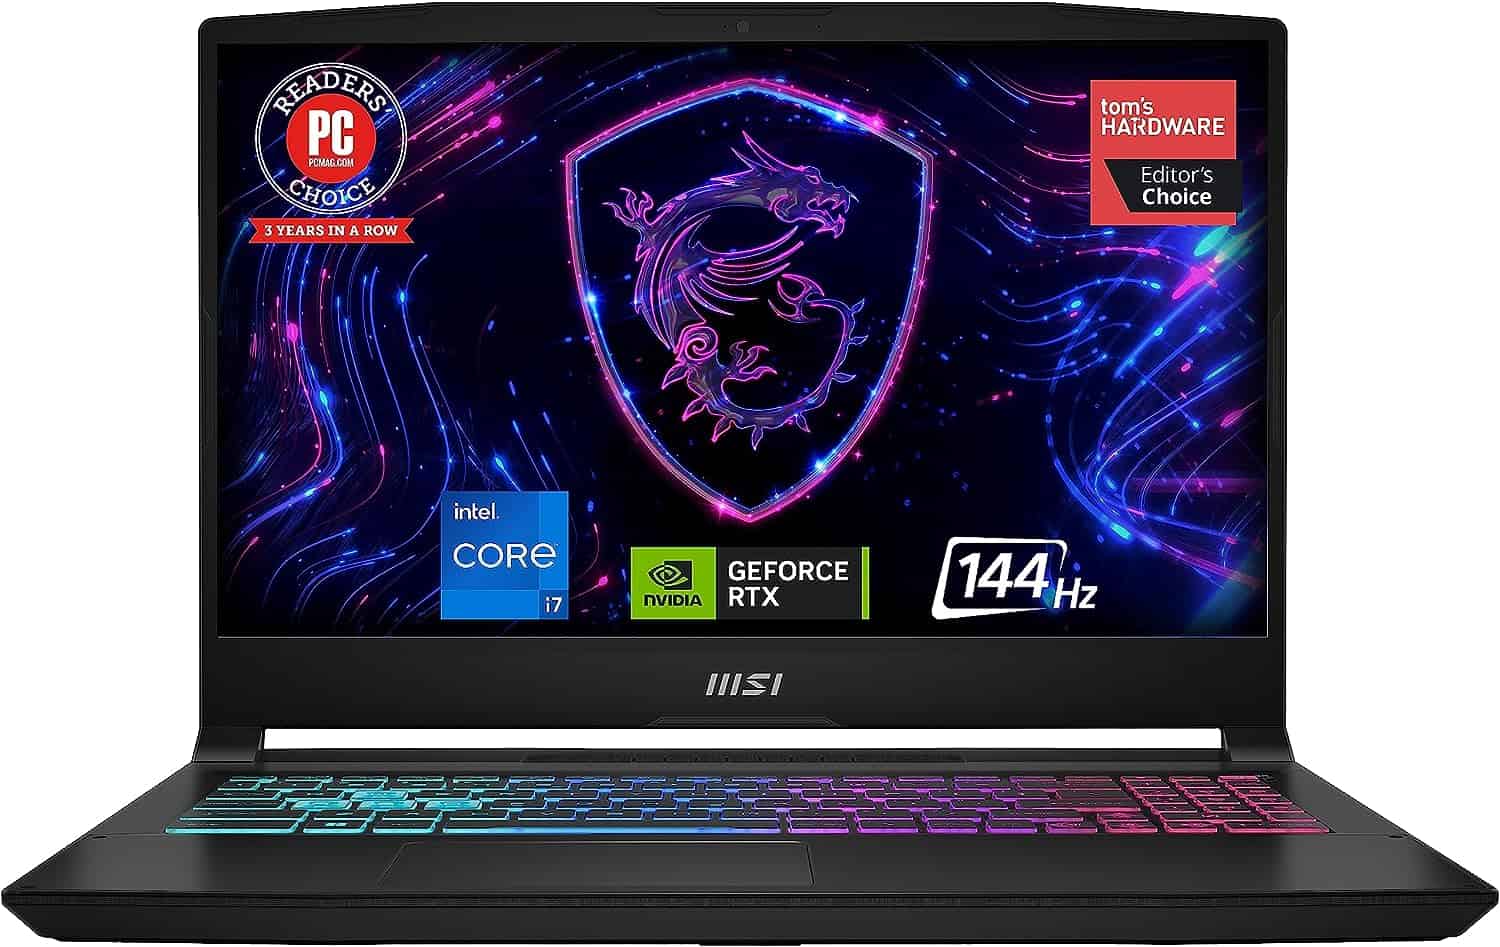 A black laptop with a dragon logo on it.